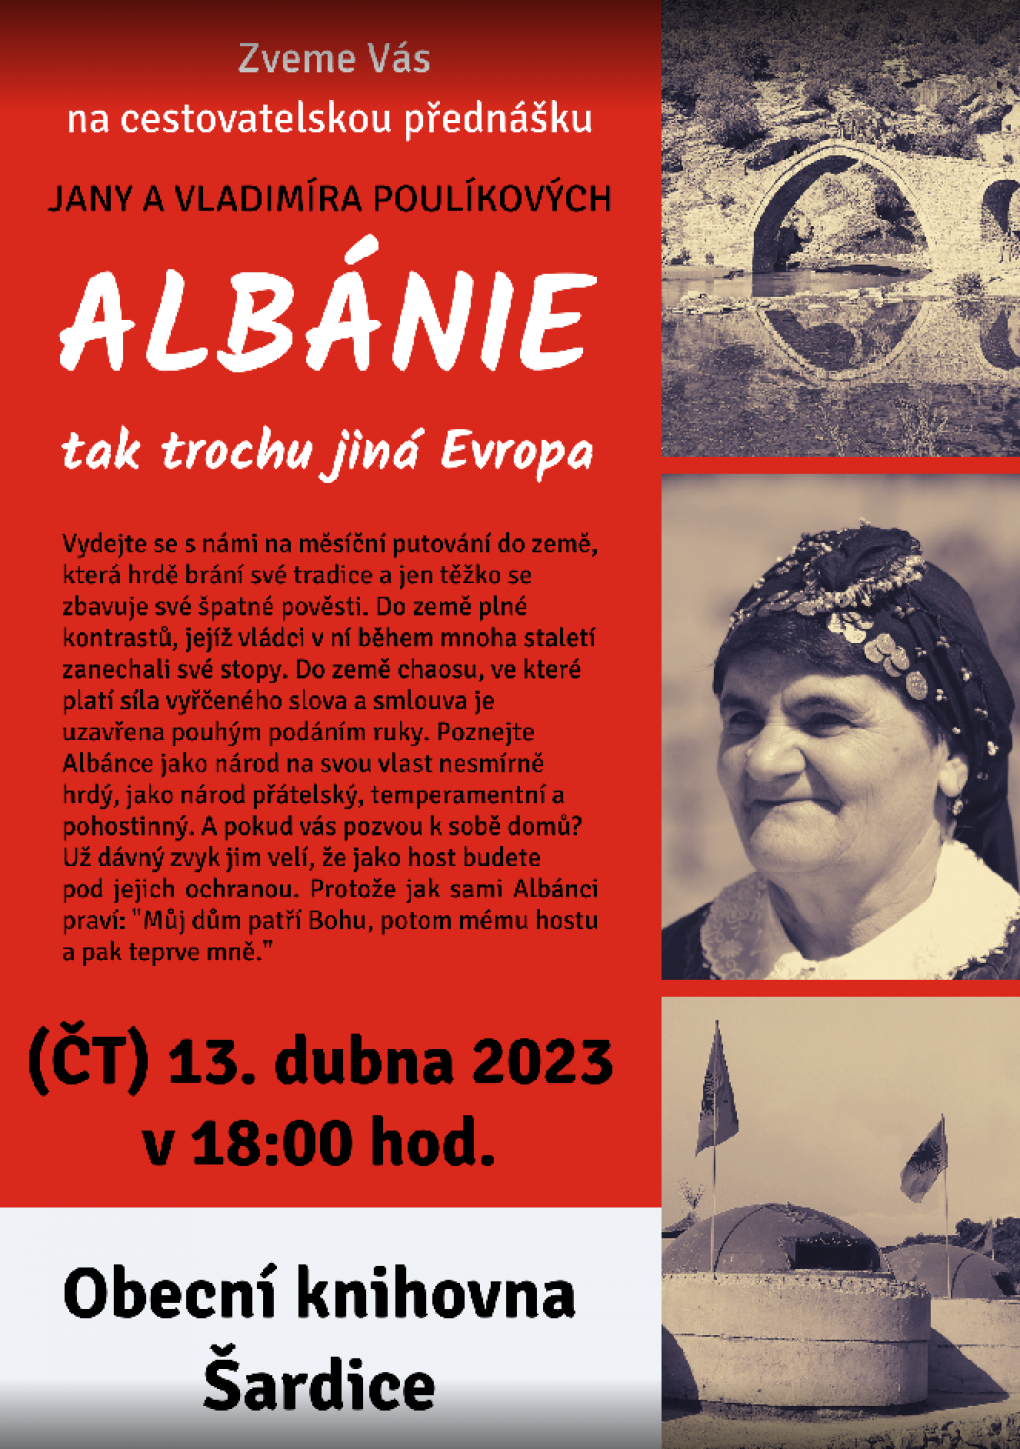 albanie_13_4_2023.png